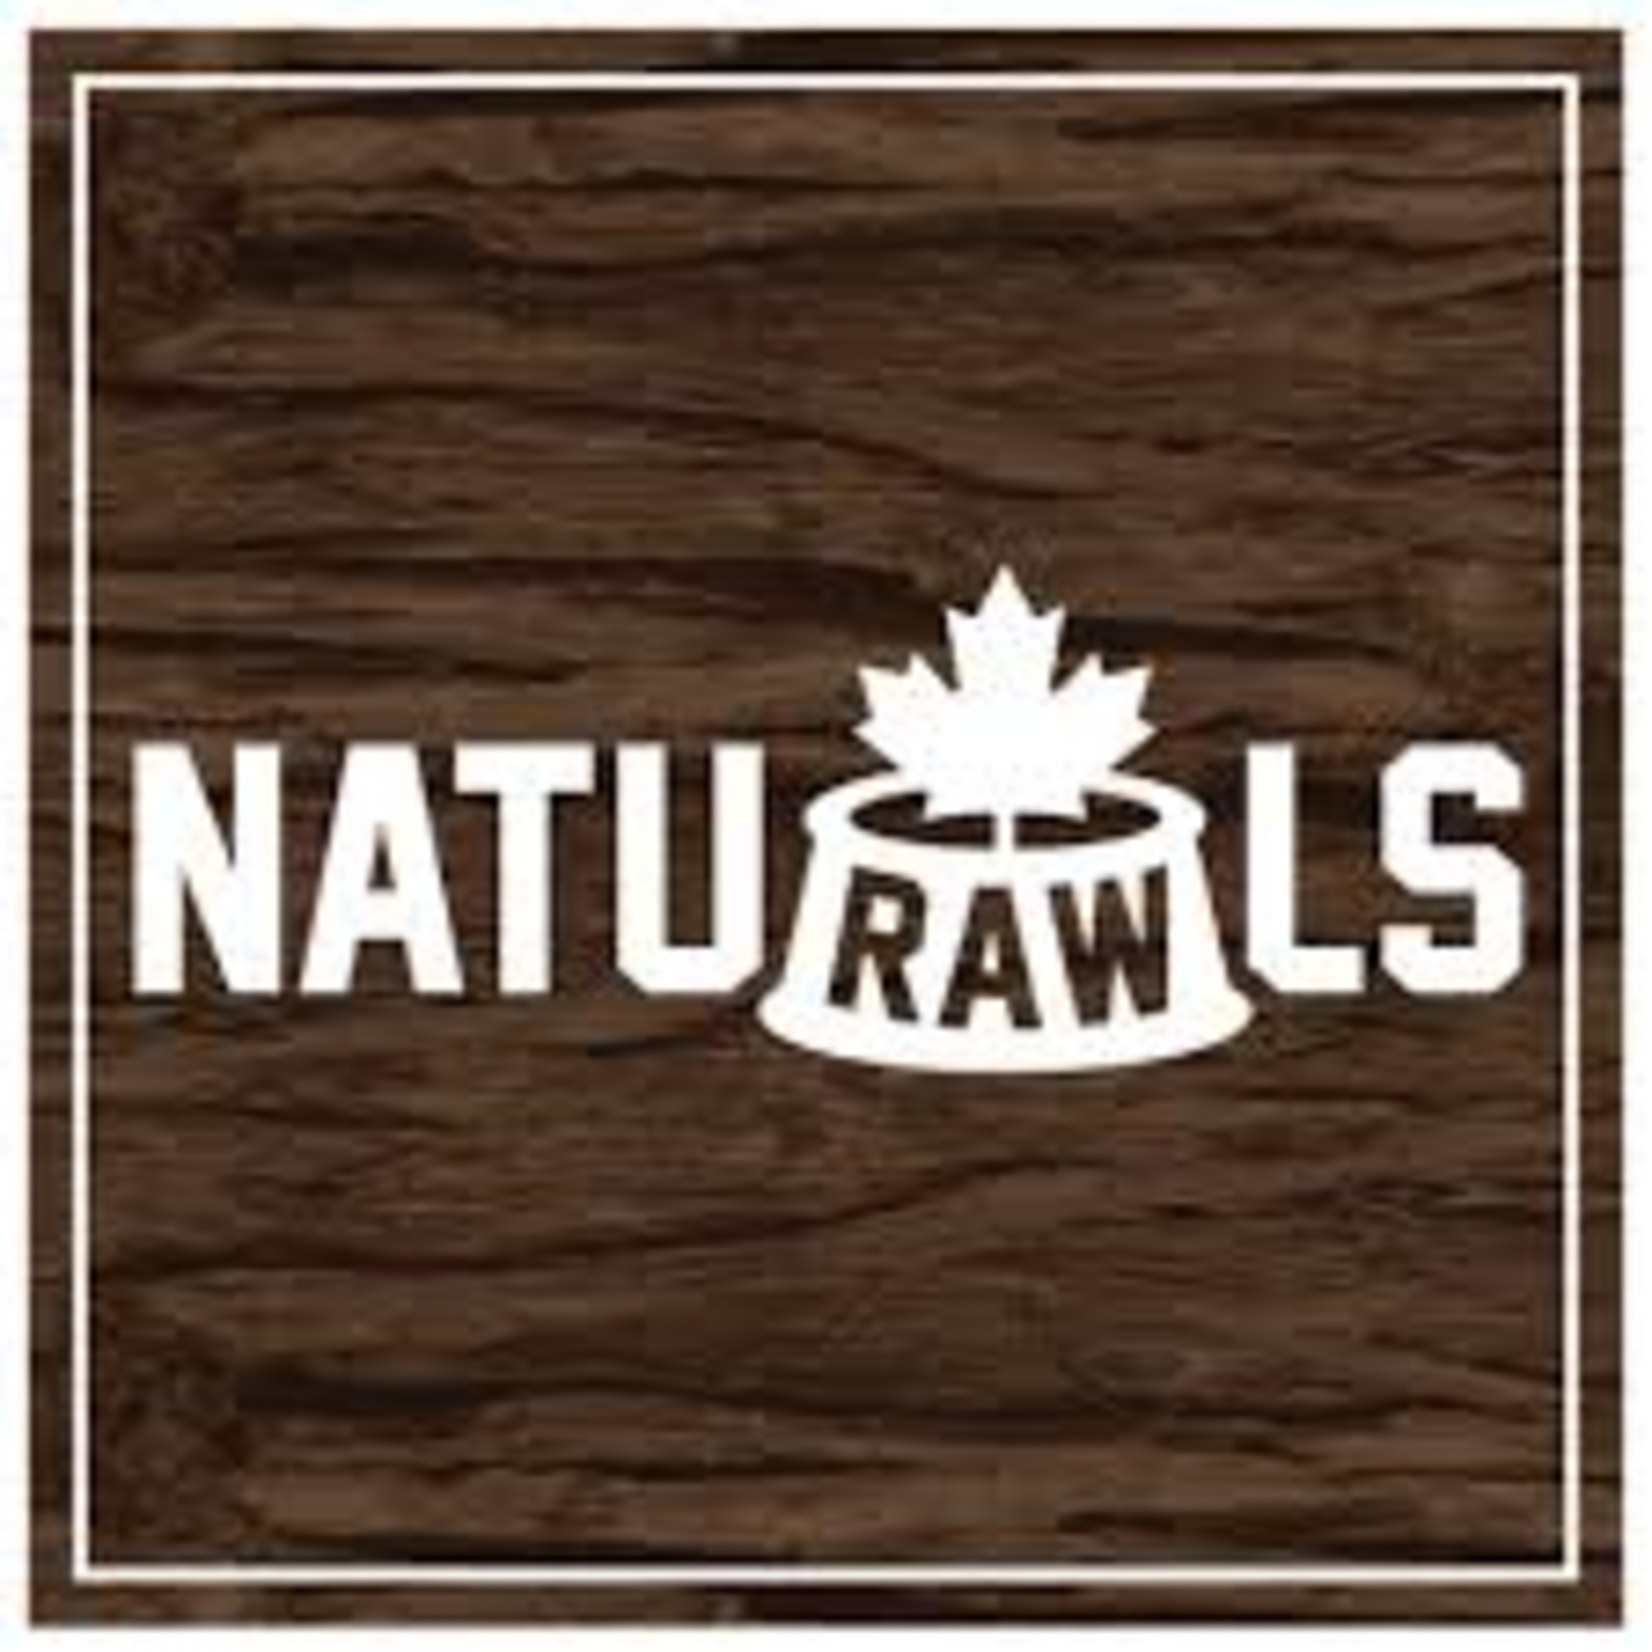 NatuRAWls NatuRAWls - Raw Cat Meals